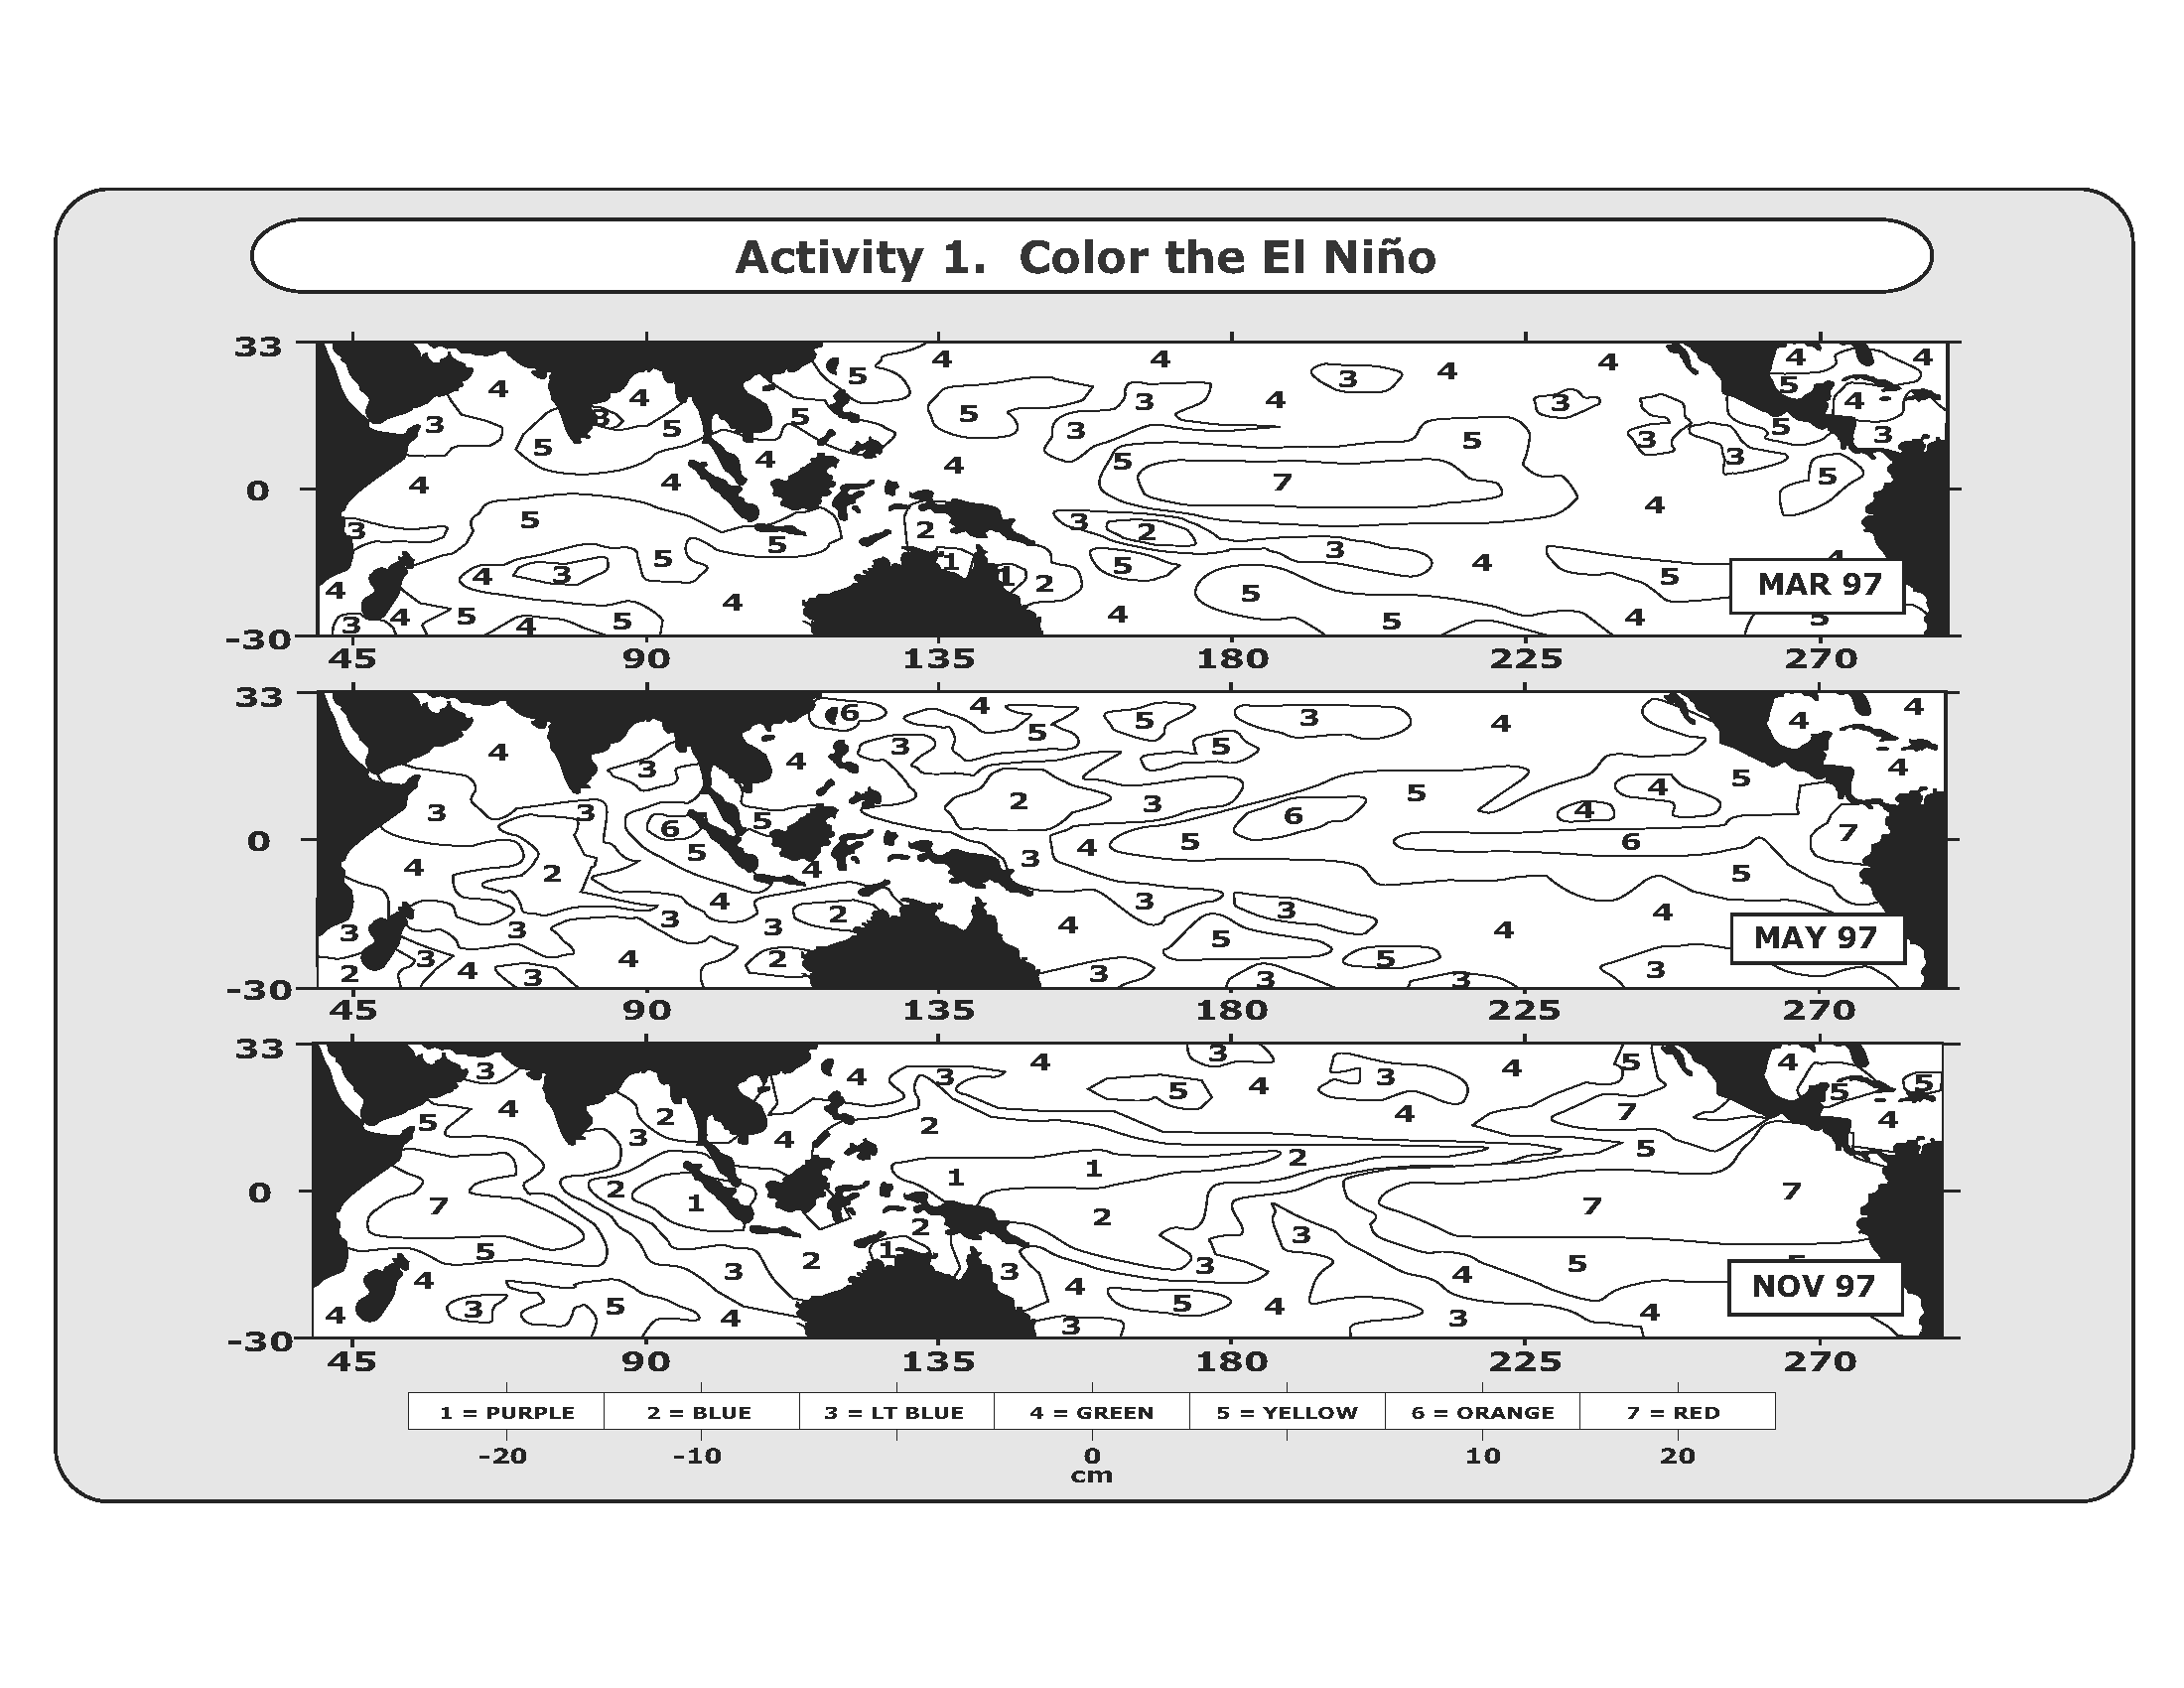 Model Page 1. Source: Modeled after El Nino NASA JPL